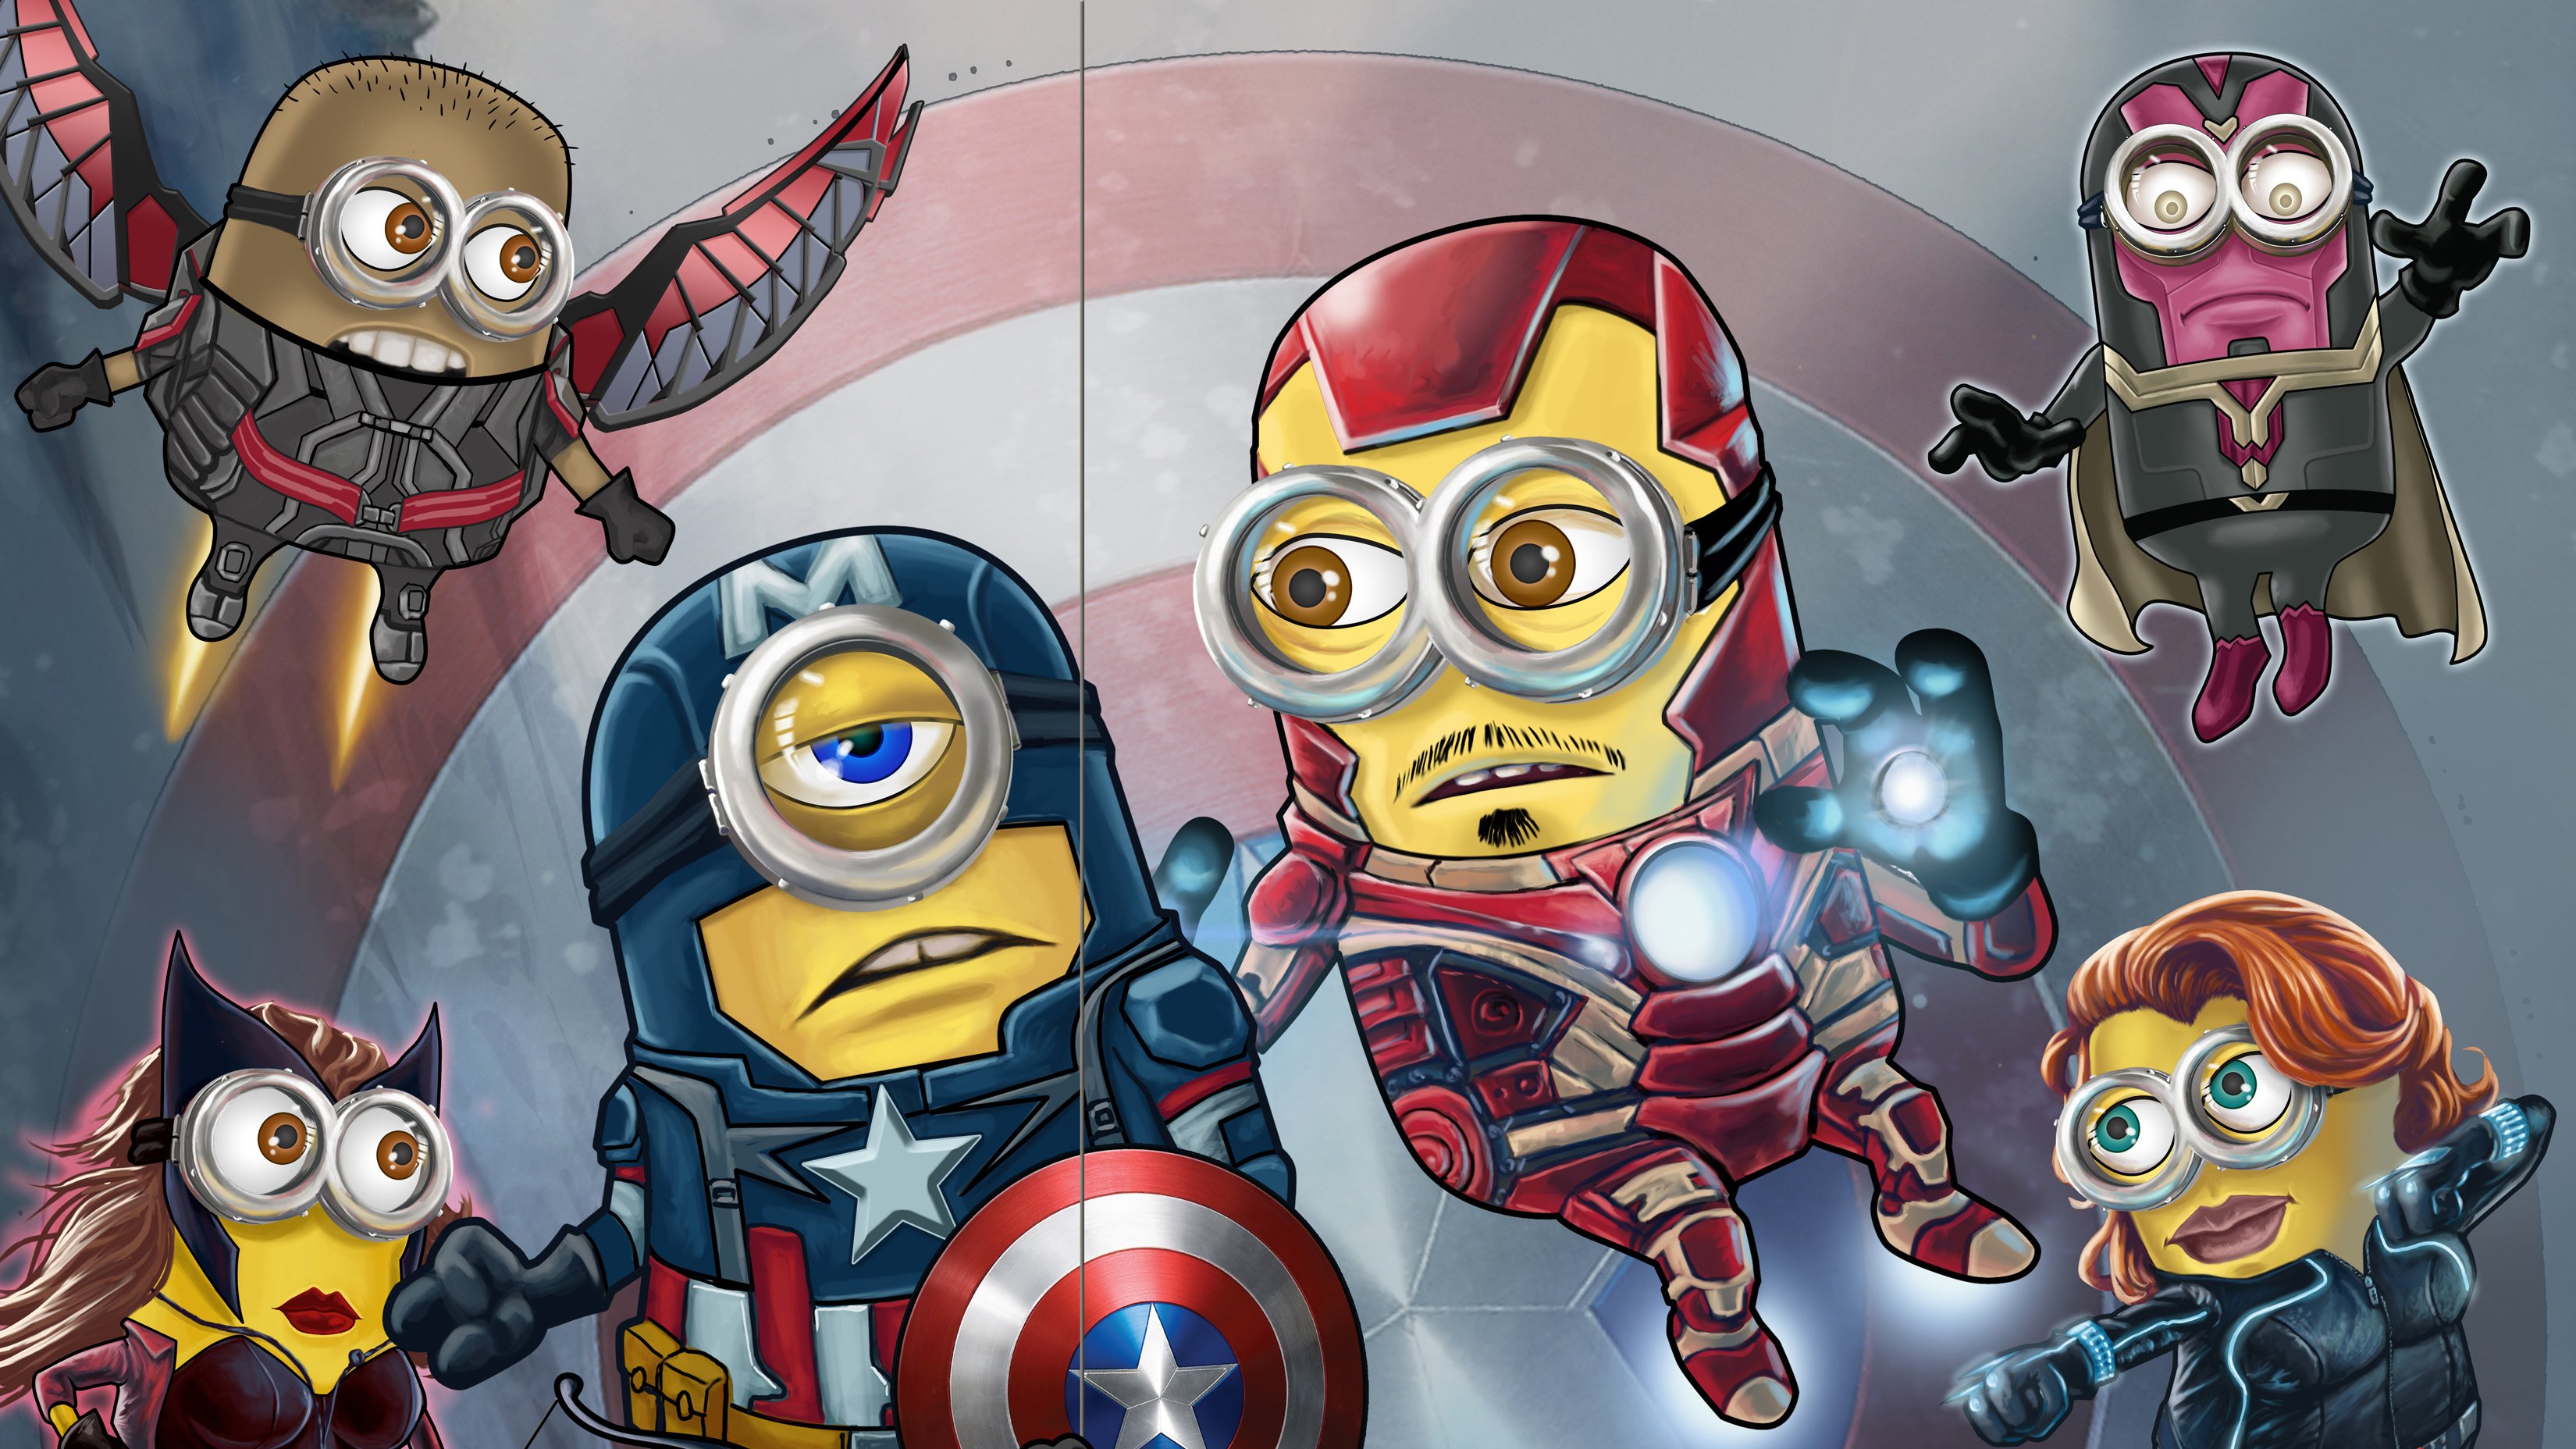 Wallpaper Minion as Avengers